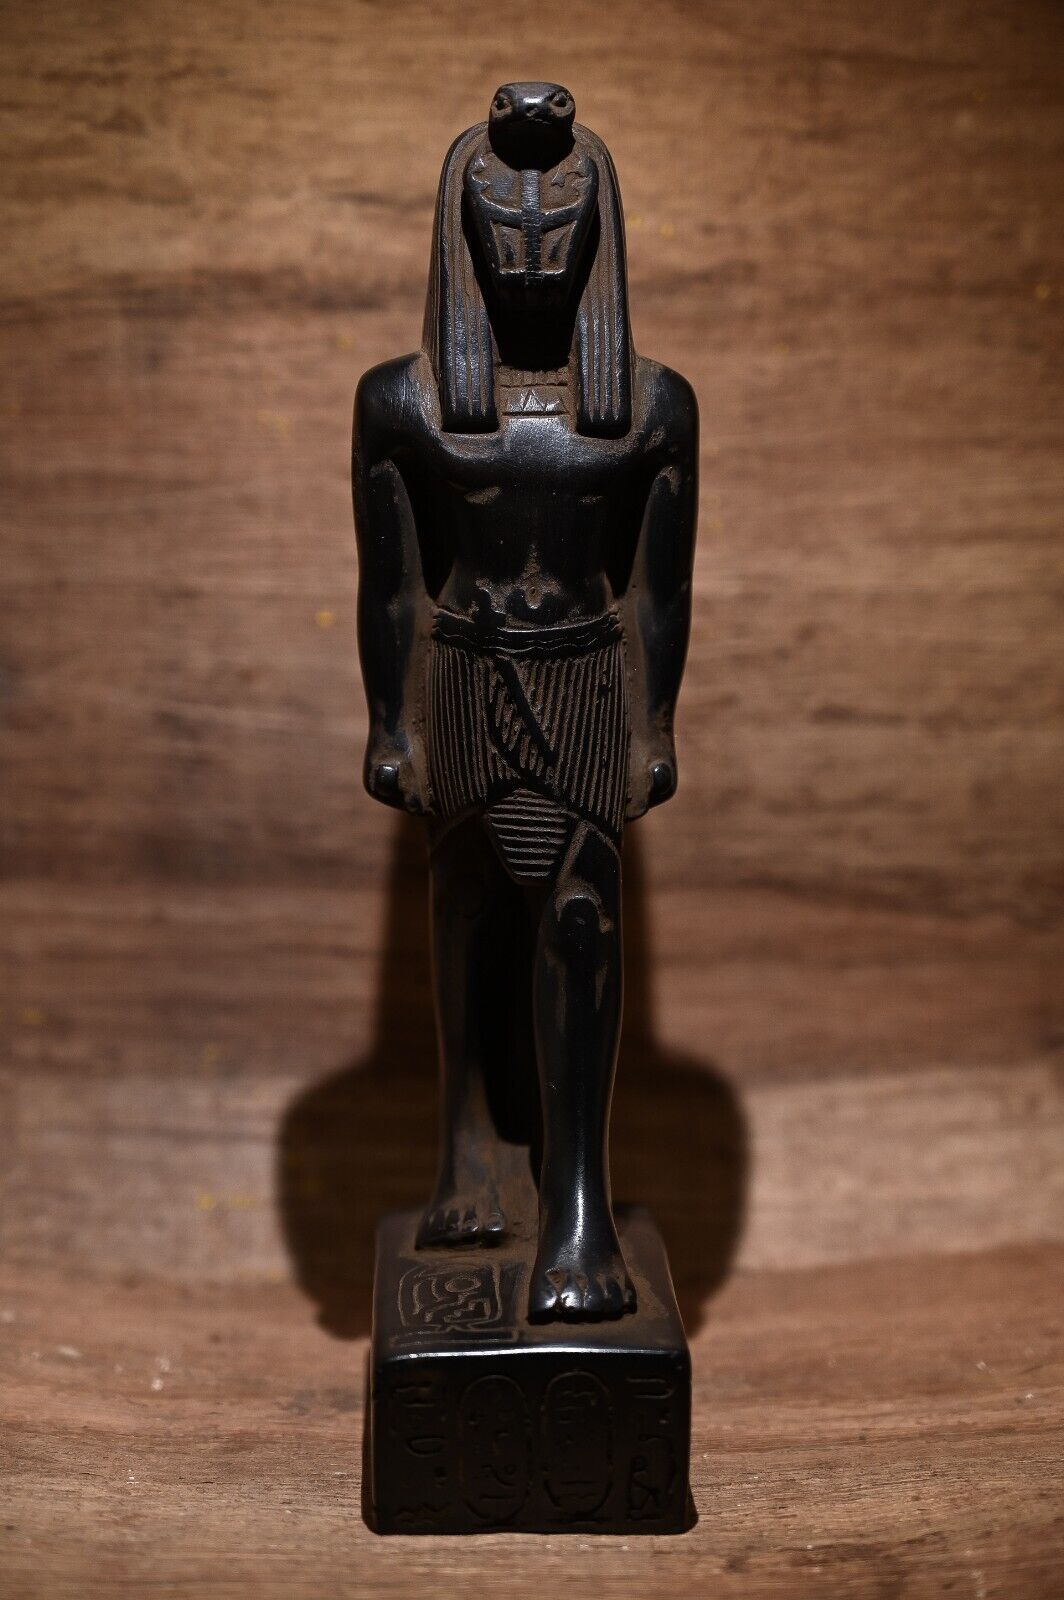 Rare Ancient Egyptian statue of goddess Wadjet the Cobra